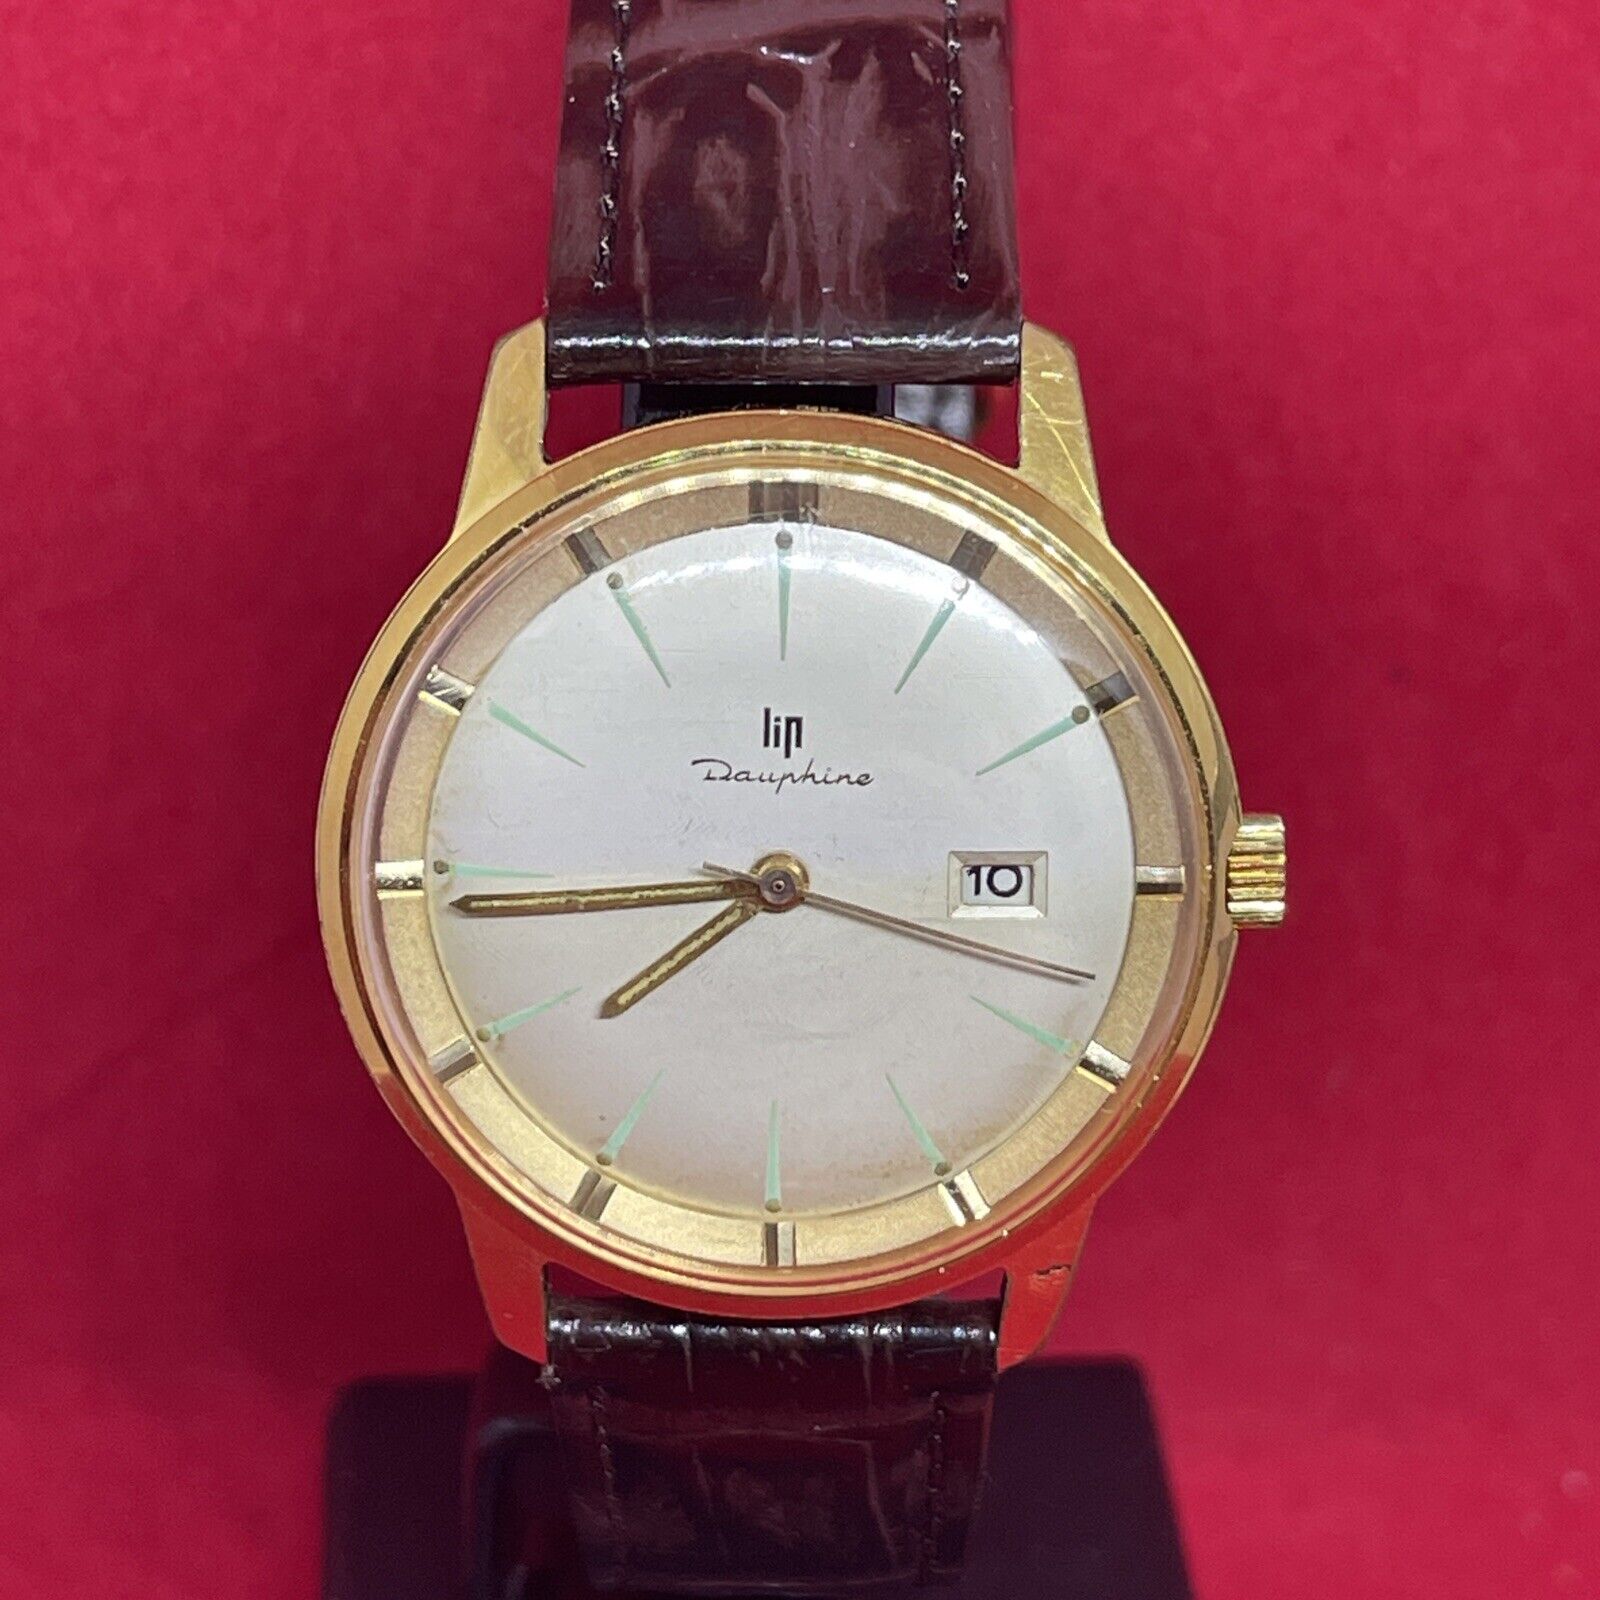 LIP Dauphine Vintage Mechanical Watch R558 / 21600 INT 451 France